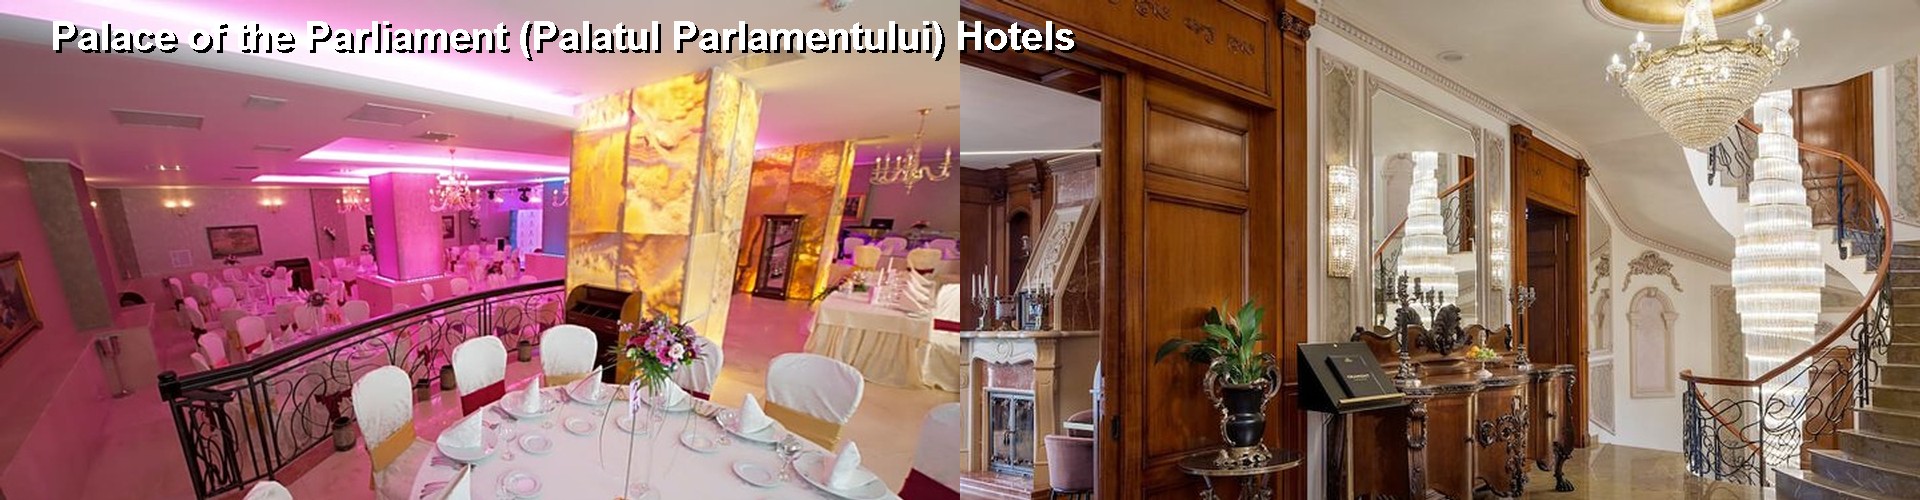 5 Best Hotels near Palace of the Parliament (Palatul Parlamentului)